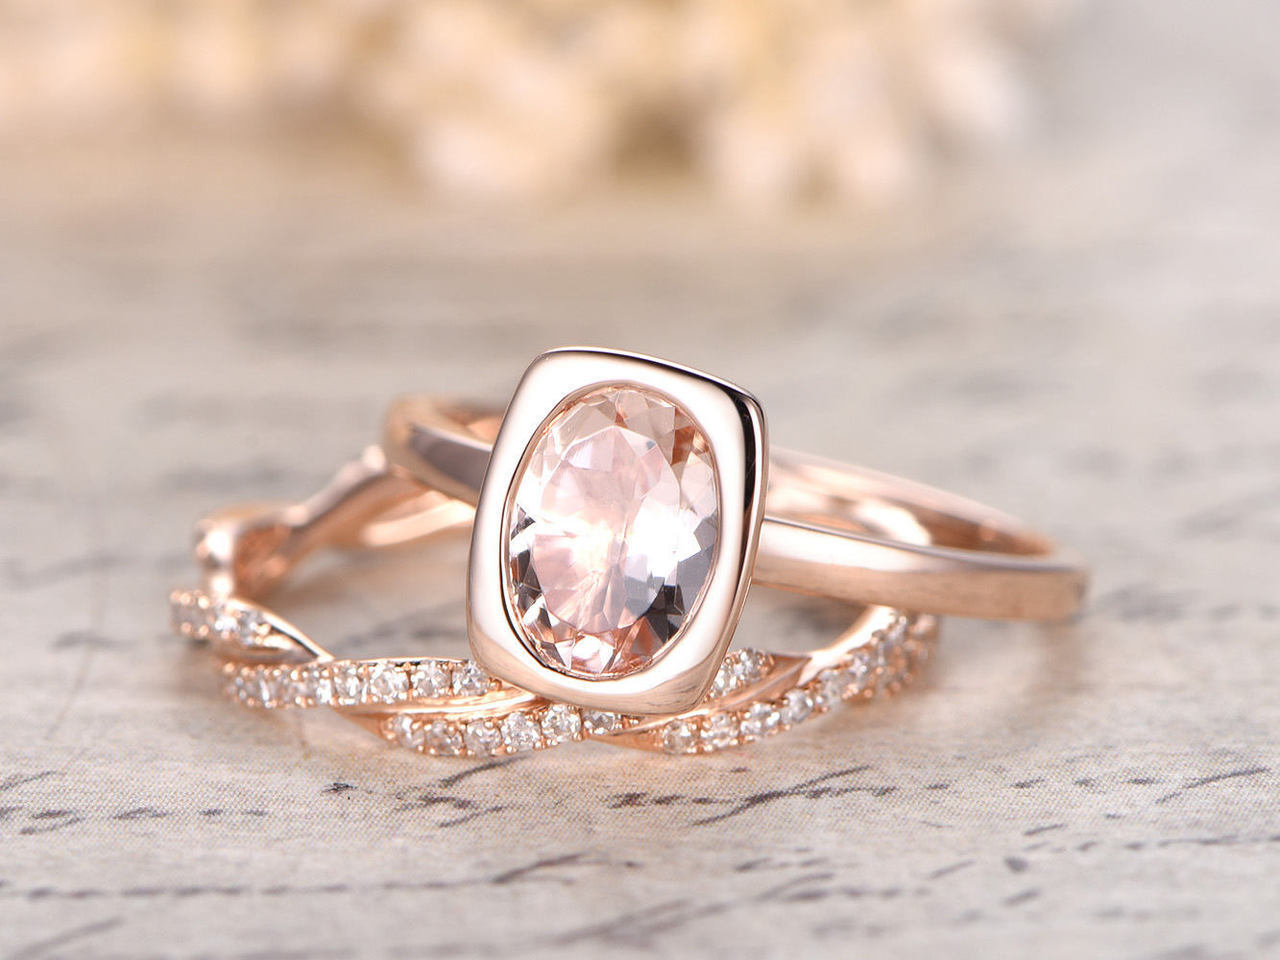 Samsfashion - 6x8mm oval morganite & diamond wedding bezel bridal ring set 14k rose gold over